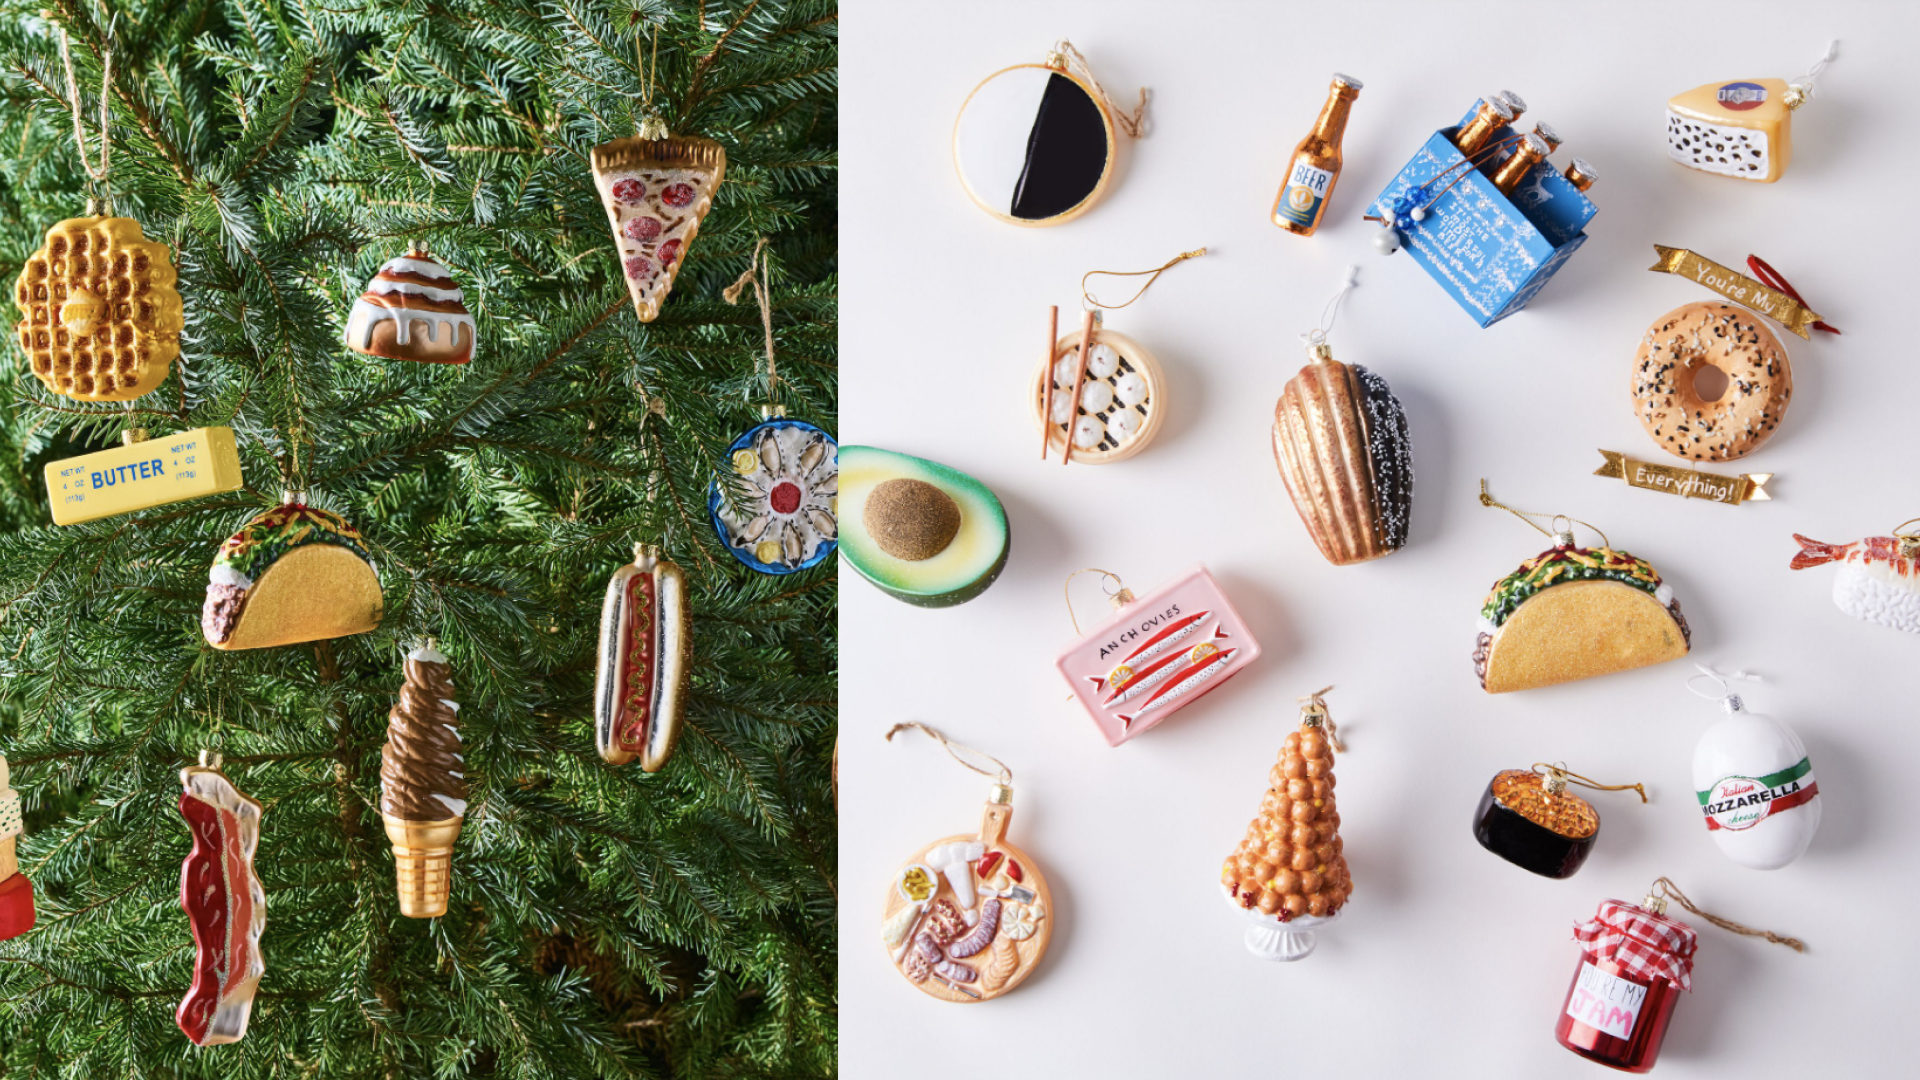 Quirky food ornaments